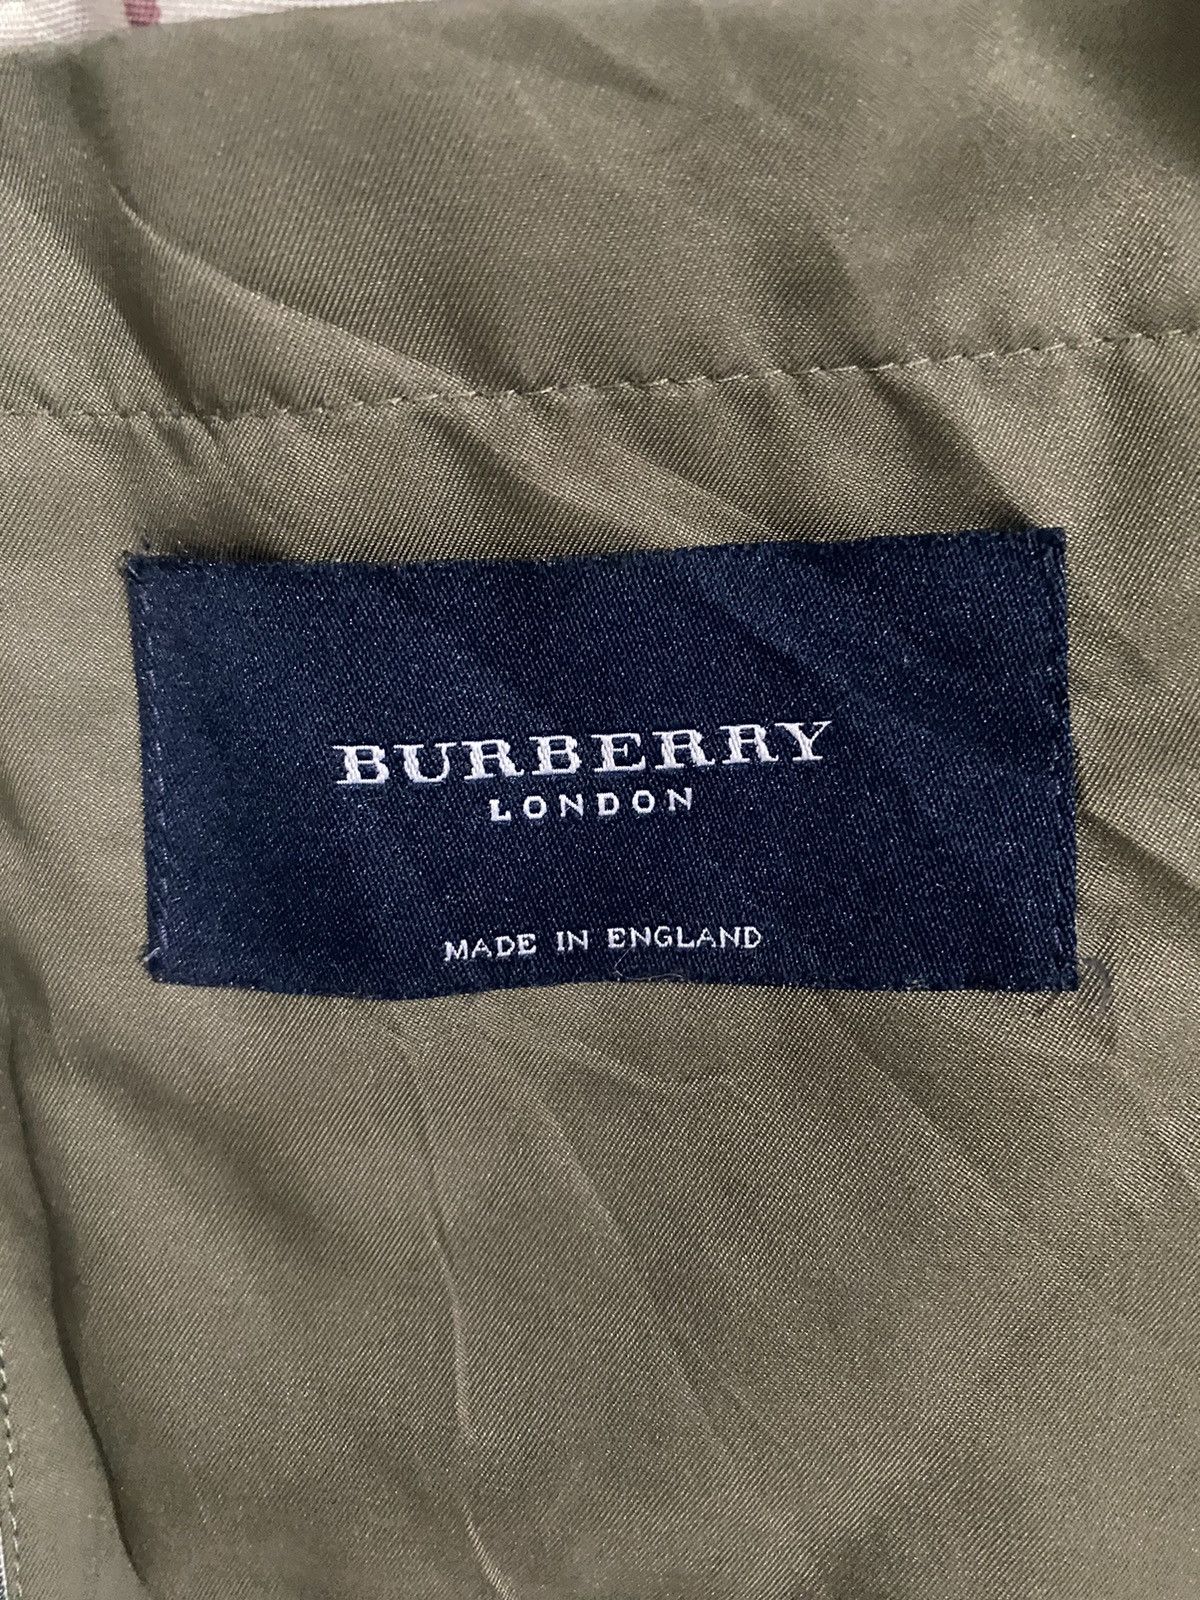 Burberry Quilted Novacheck Parka Jacket Made England - 6